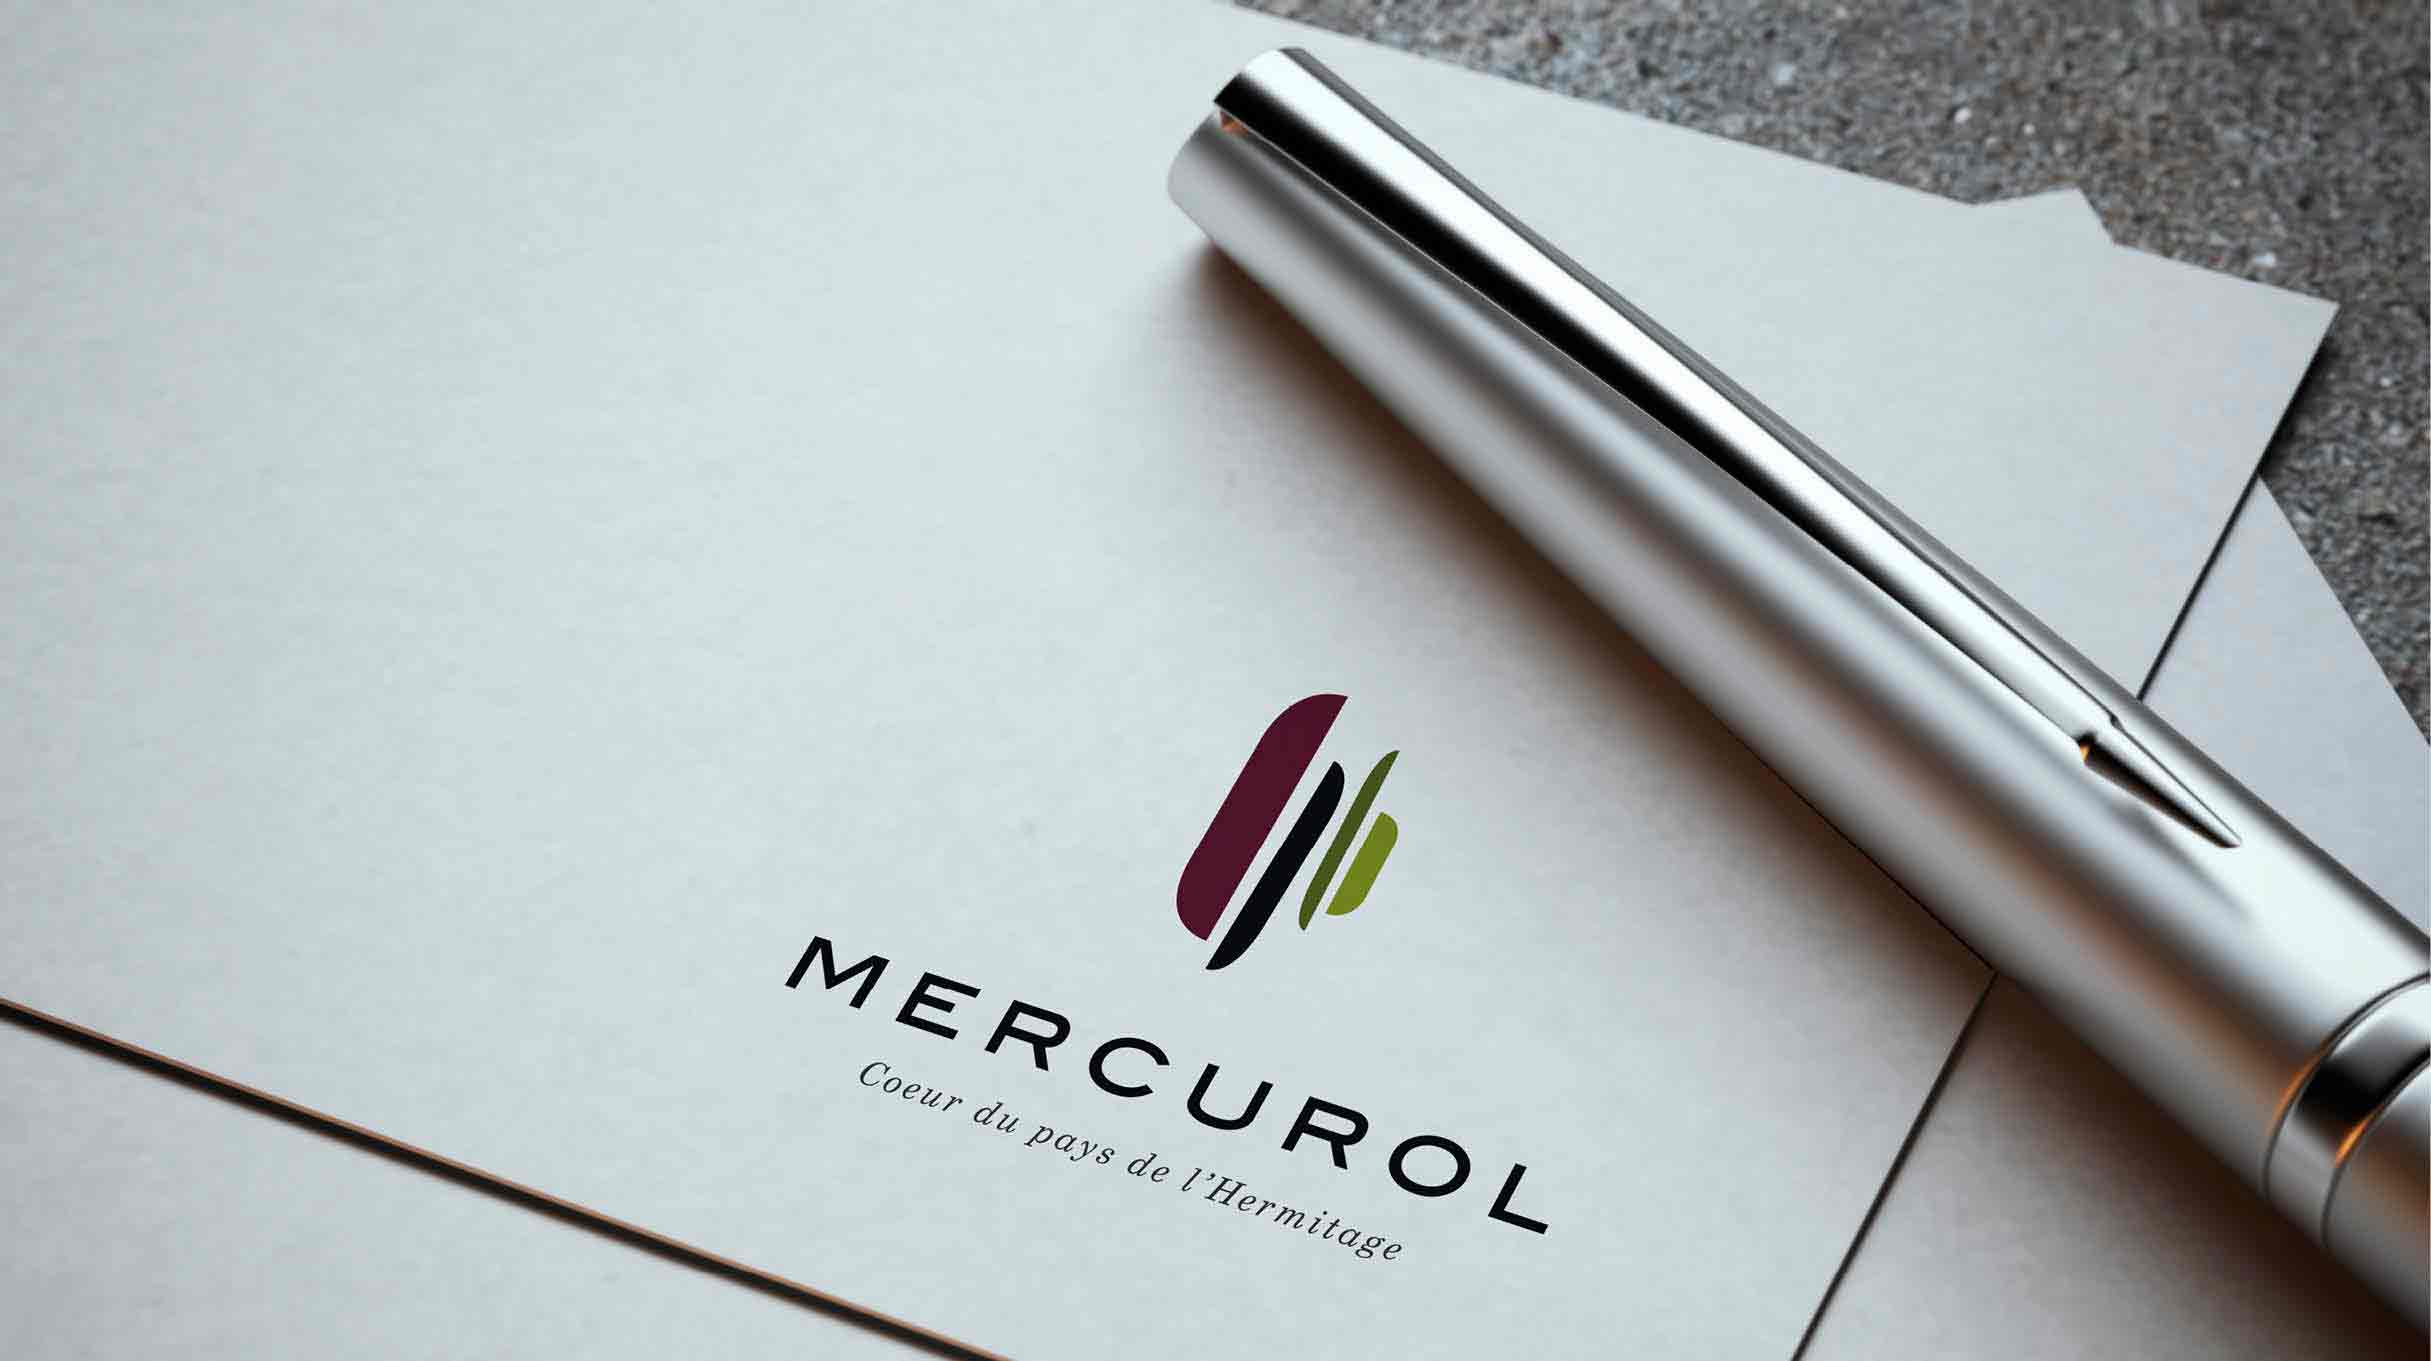 Reference4-mercurol